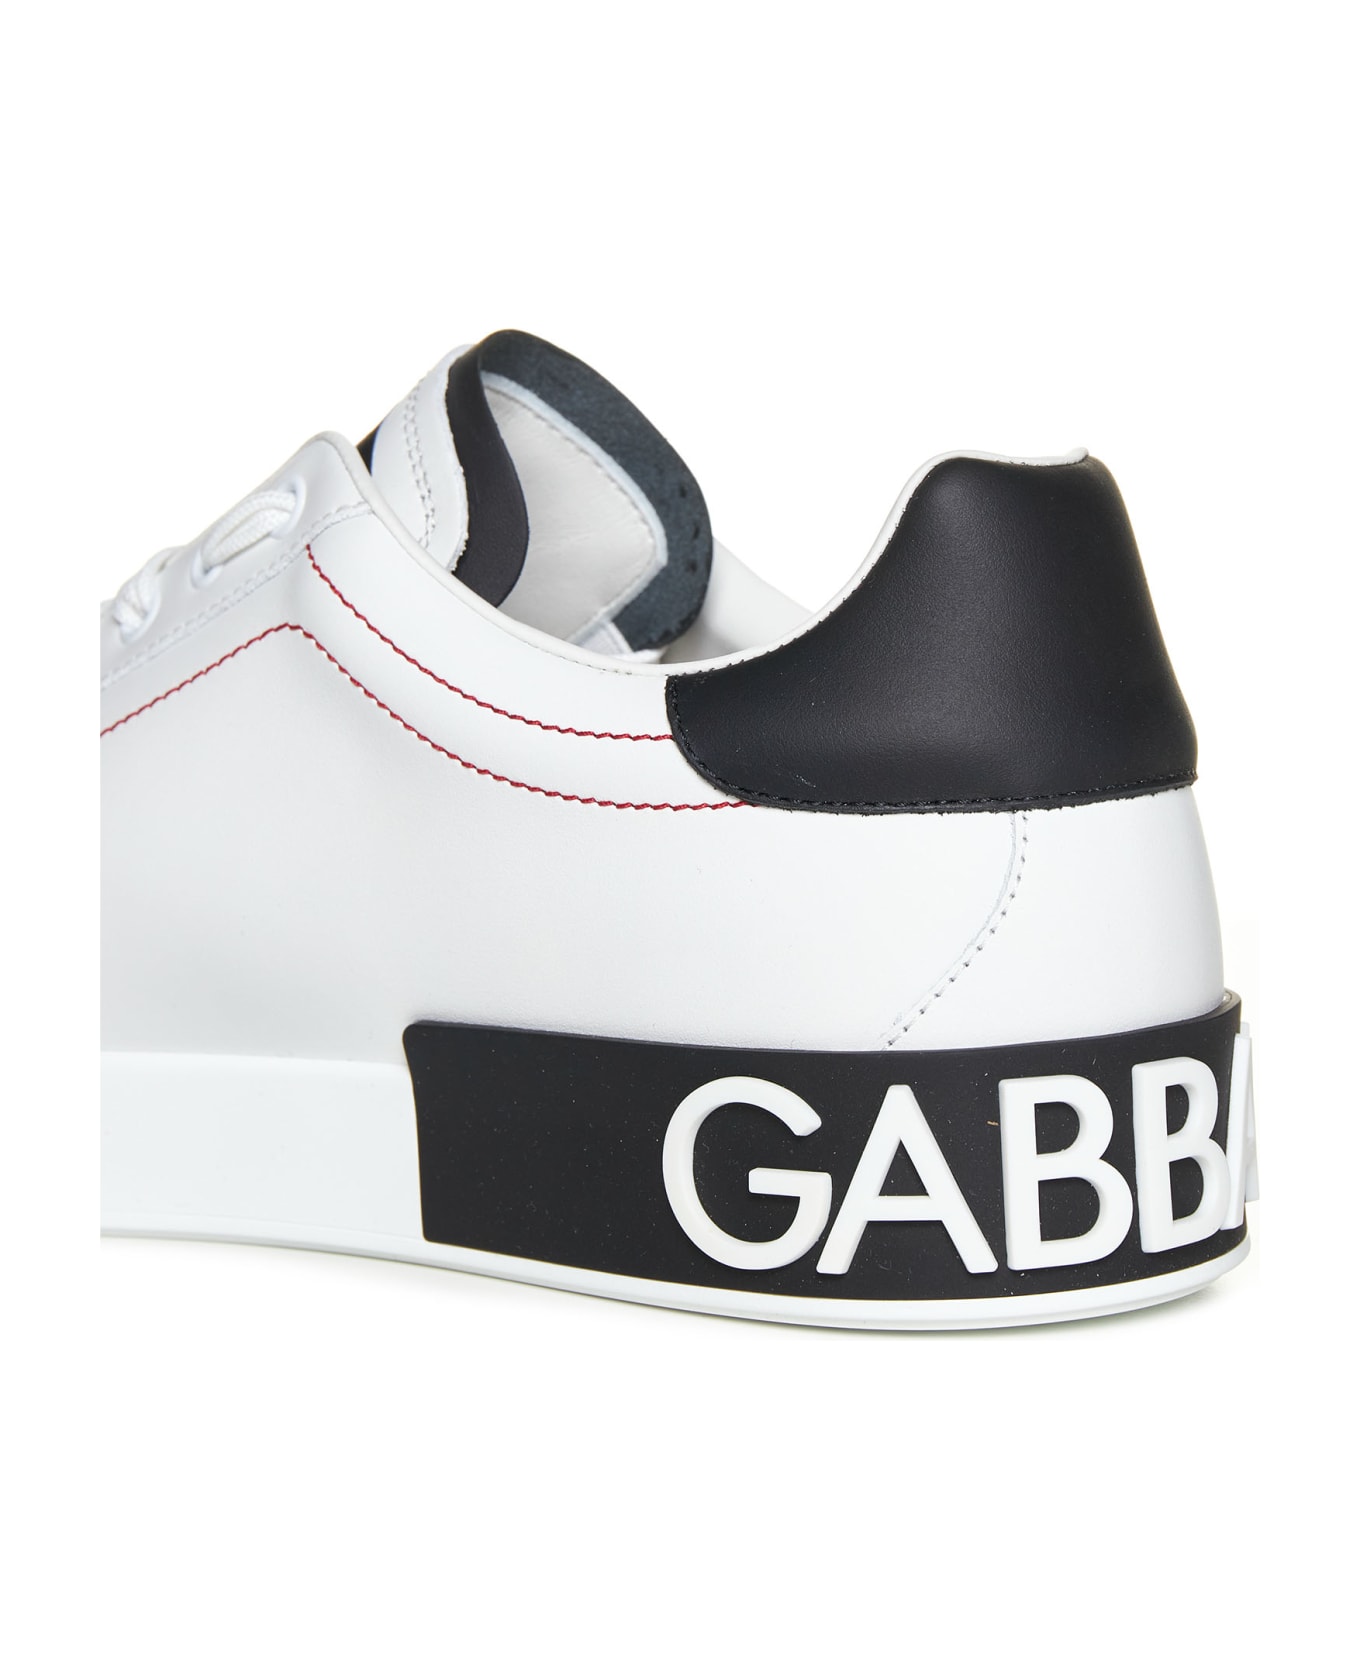 Dolce & Gabbana Portofino Sneakers - white/black